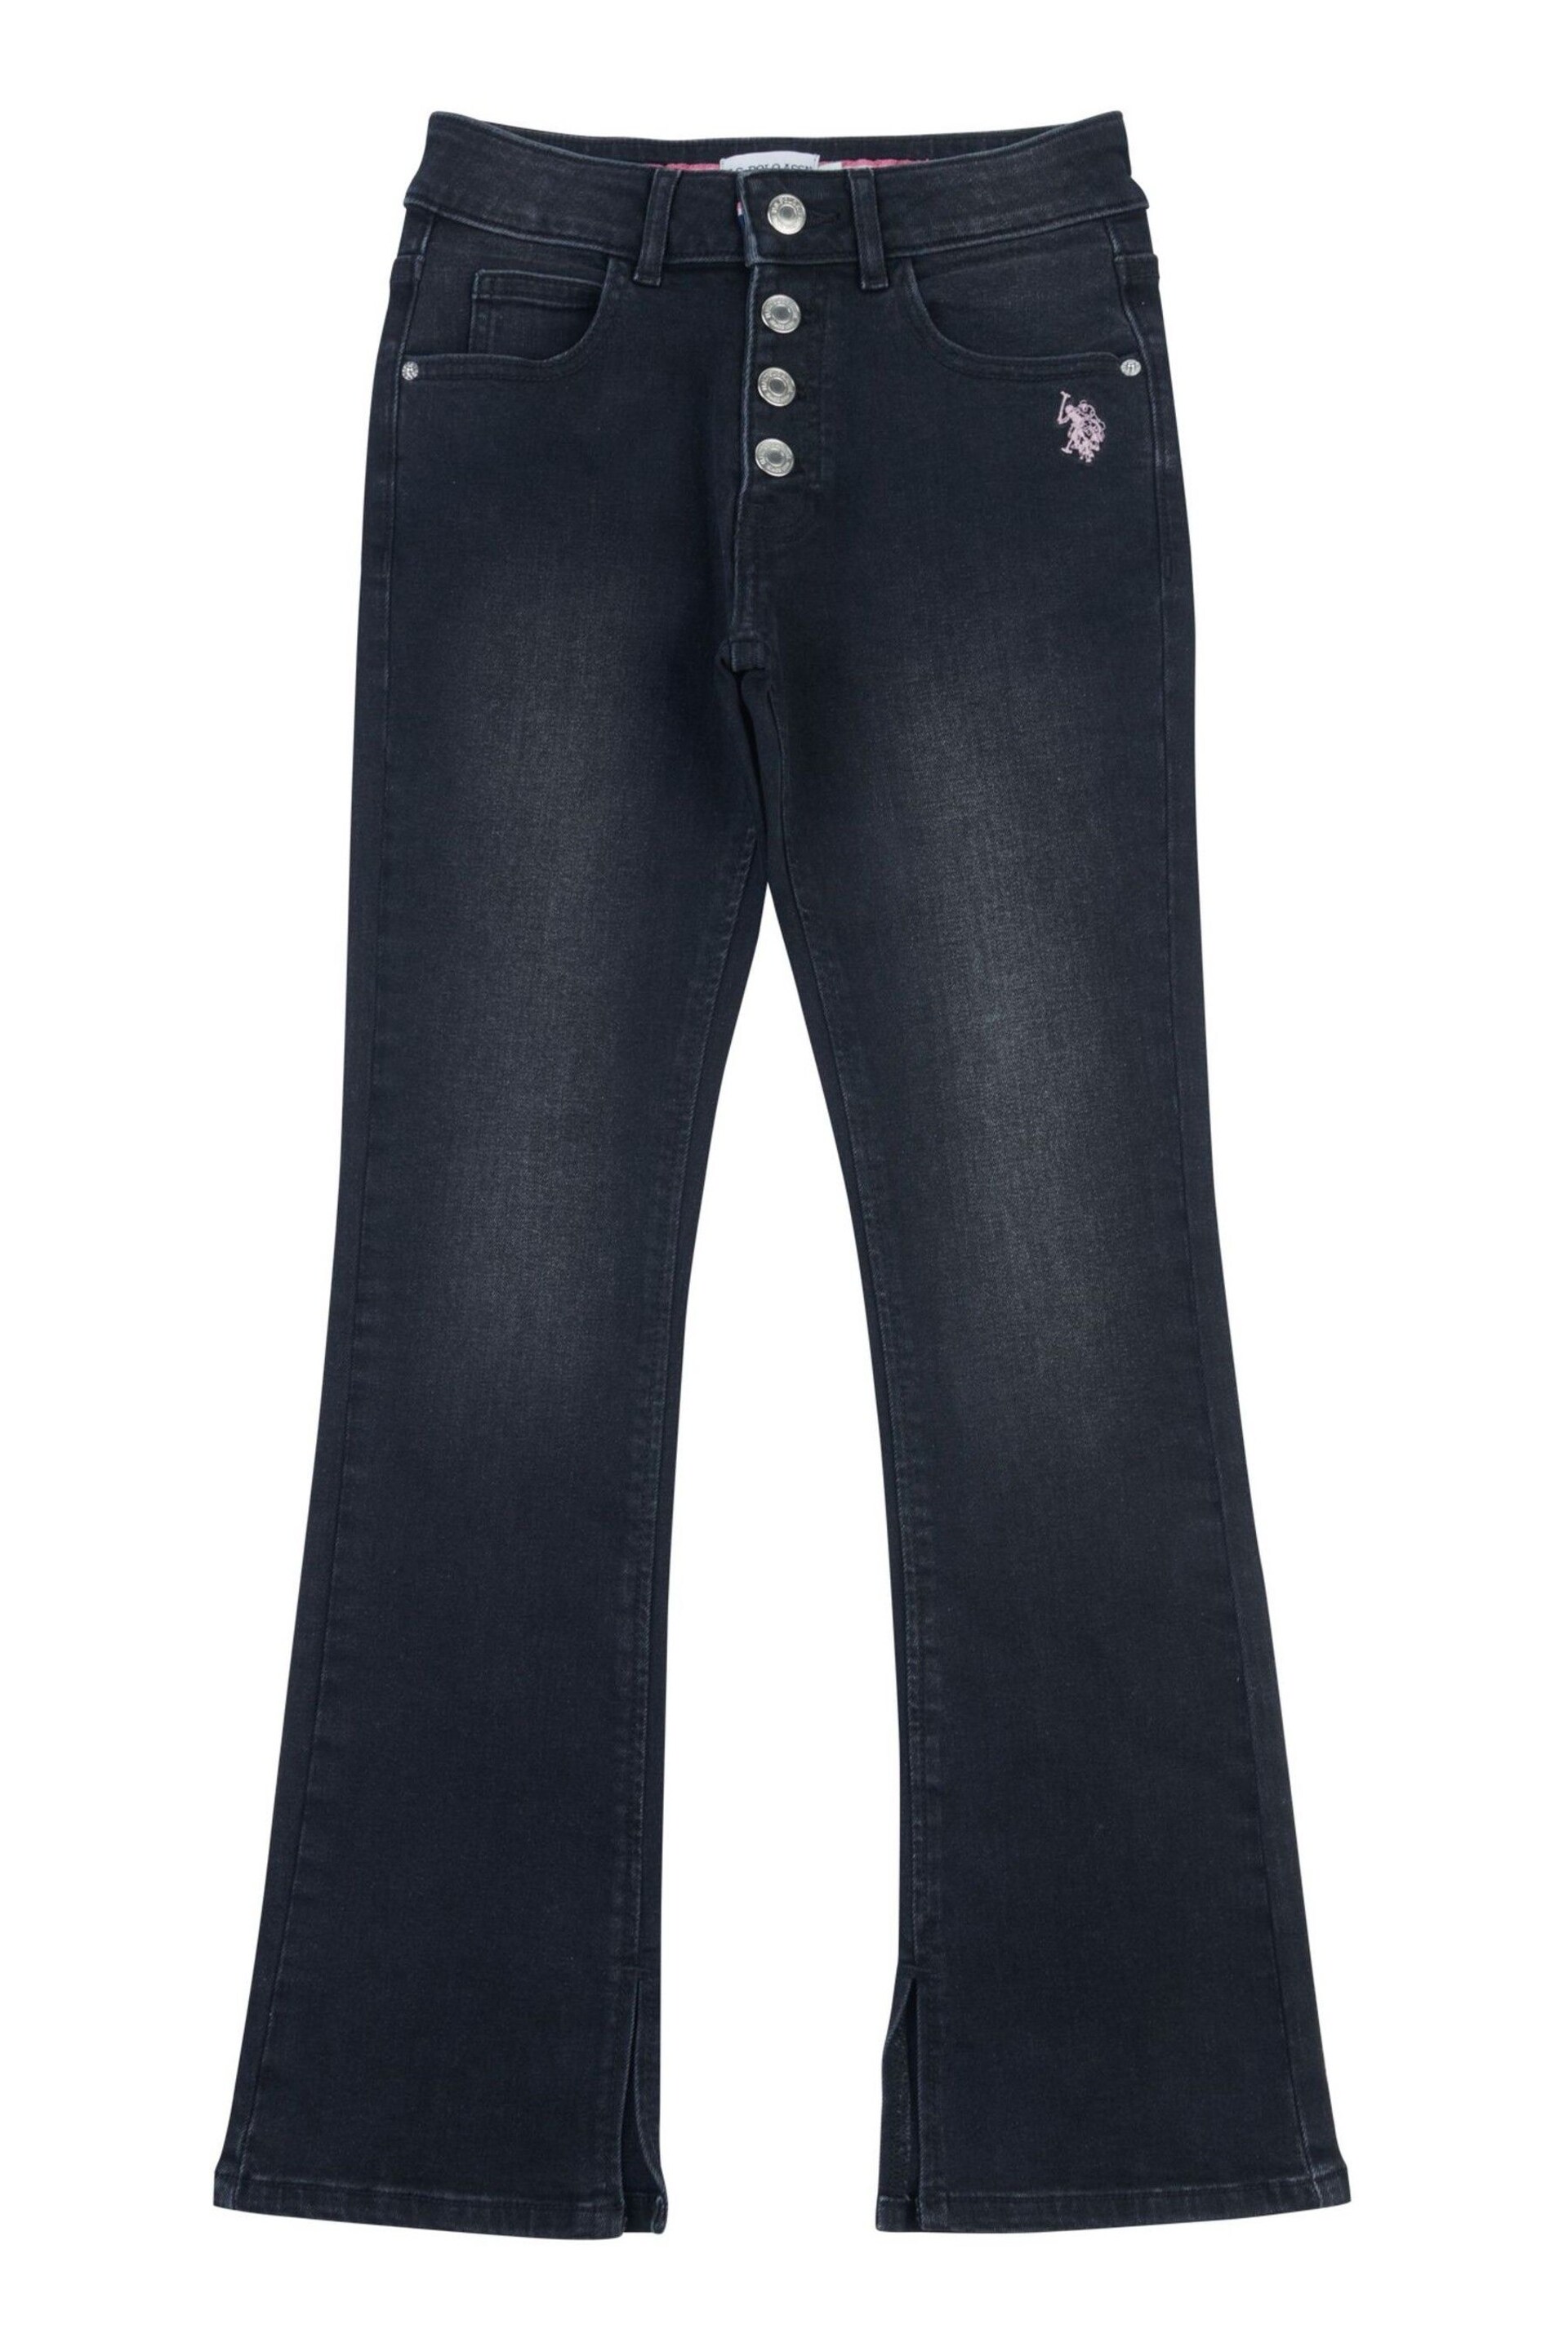 U.S. Polo Assn. Girls Black Coloured Bootleg Denim Jeans - Image 5 of 6